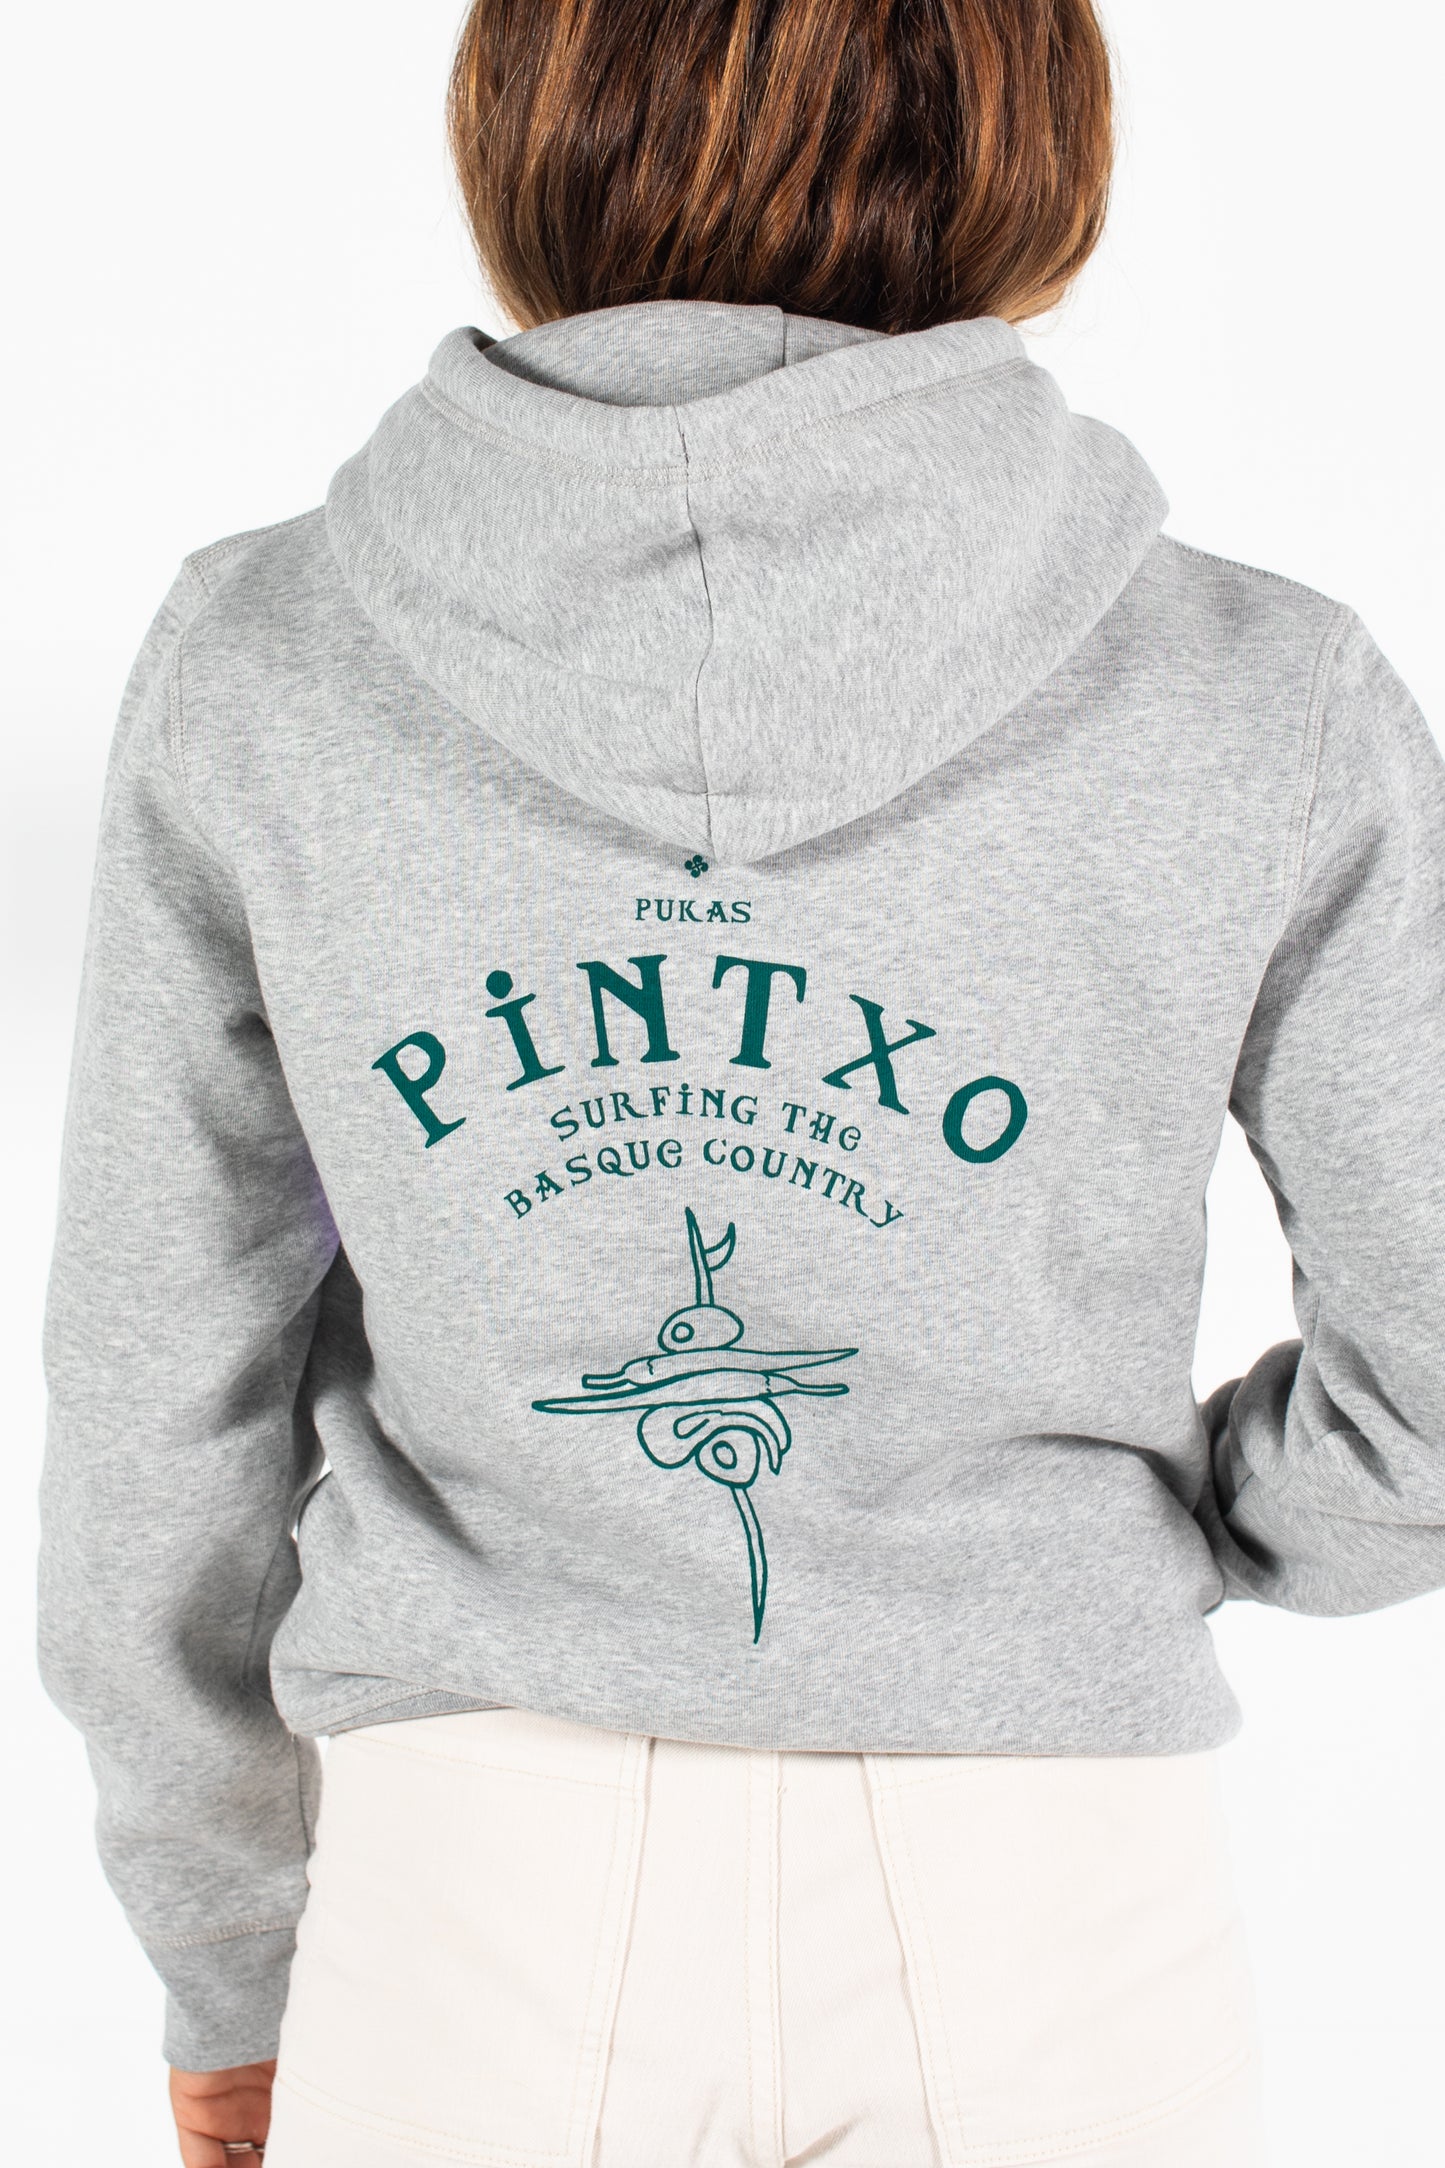 Pukas-Surf-Shop-Pintxo-Sweater-Grey